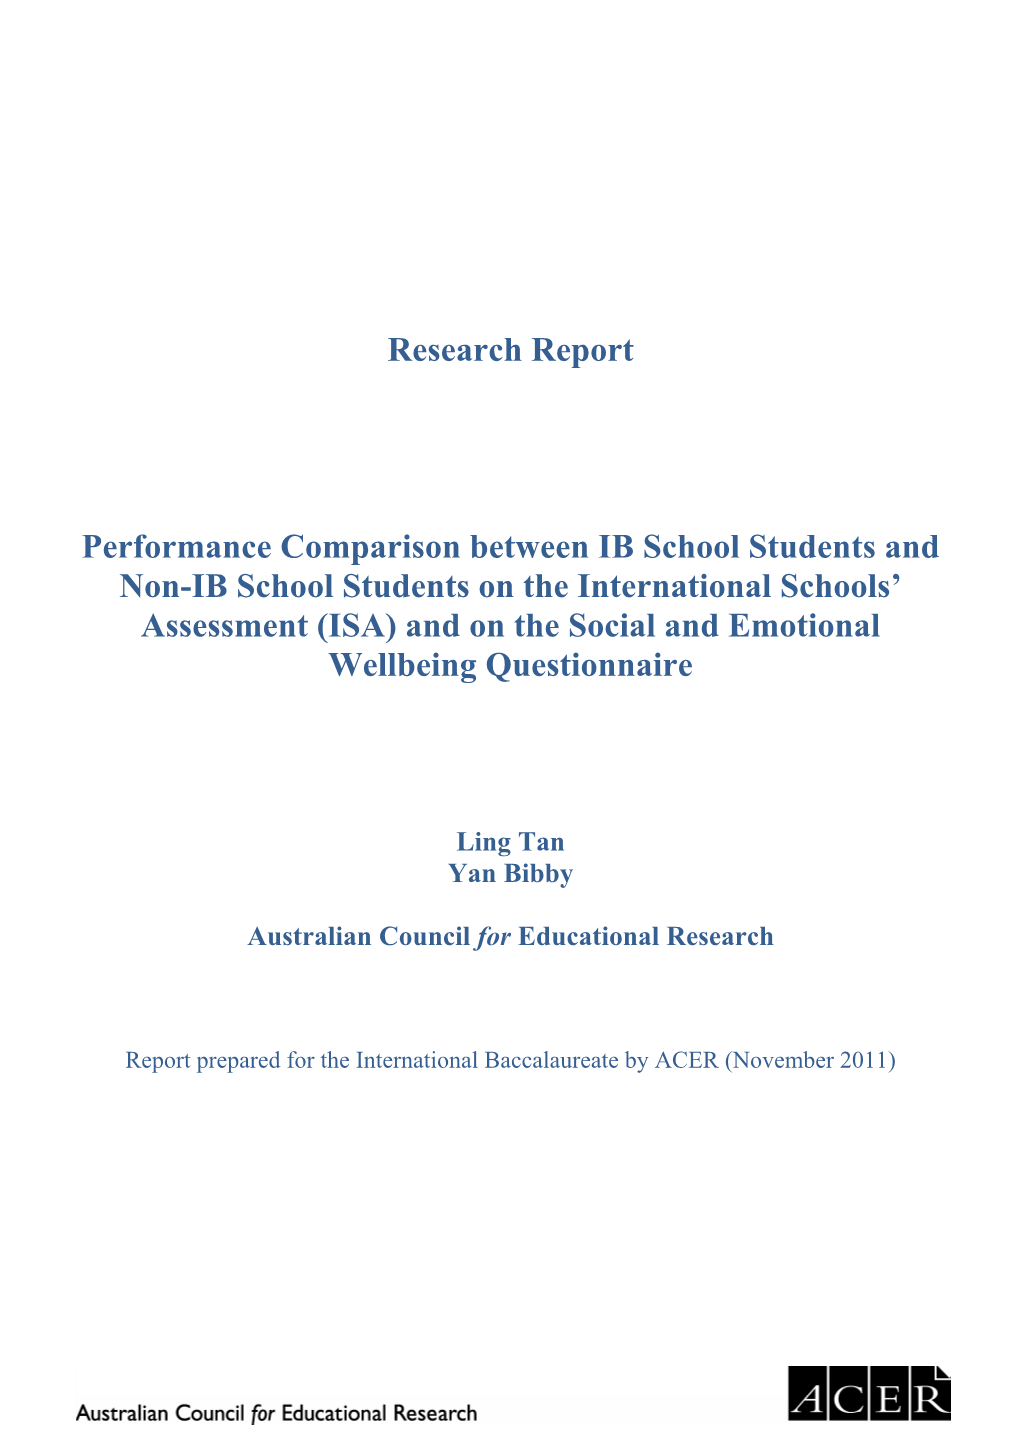 Research Report Performance Comparison Between IB School